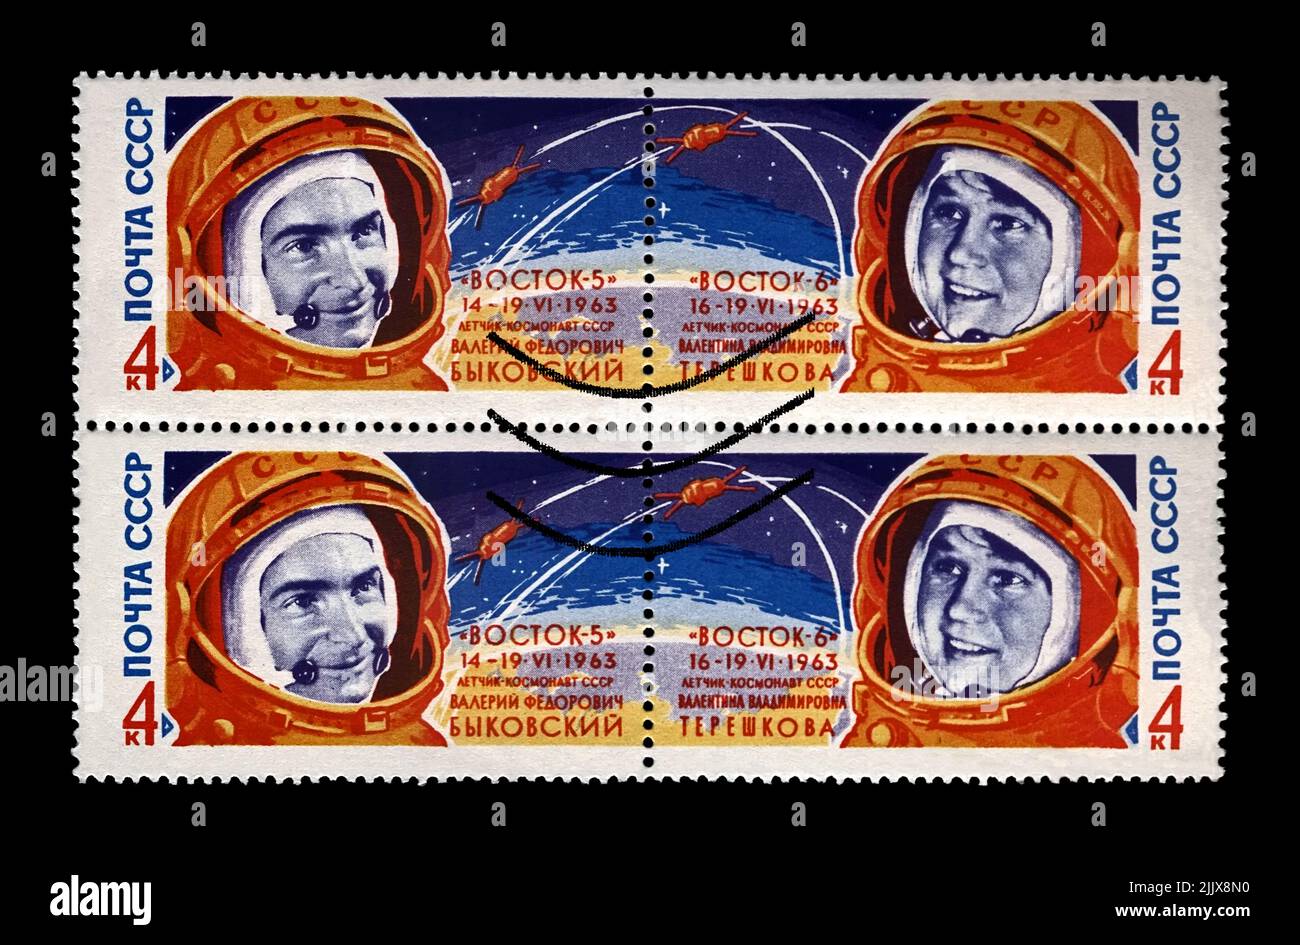 Valentina Tereshkova and Valery Bykovsky, soviet astronauts, rocket shuttle Vostok 5 and 6, circa 1963. canceled postal stamp printed in USSR Stock Photo